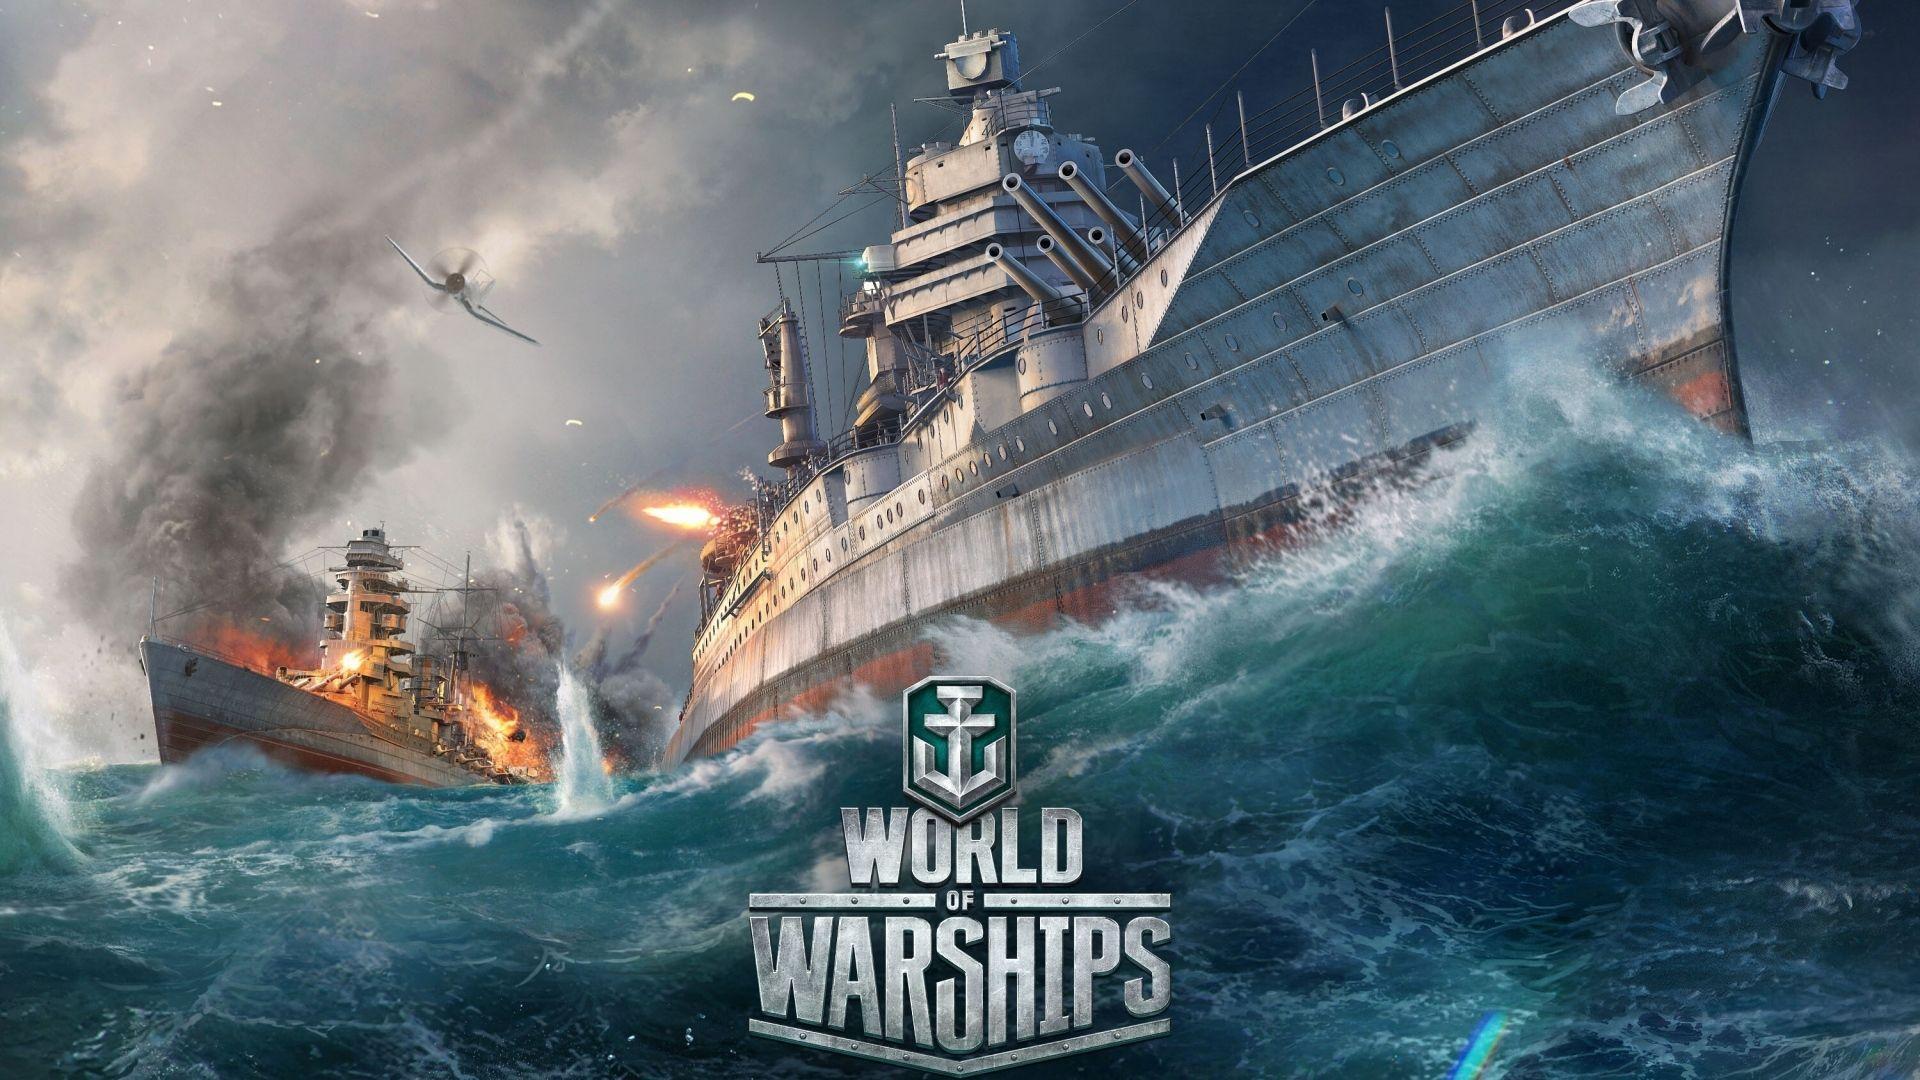 Full HD 1080p World of warships Wallpaper HD, Desktop Background